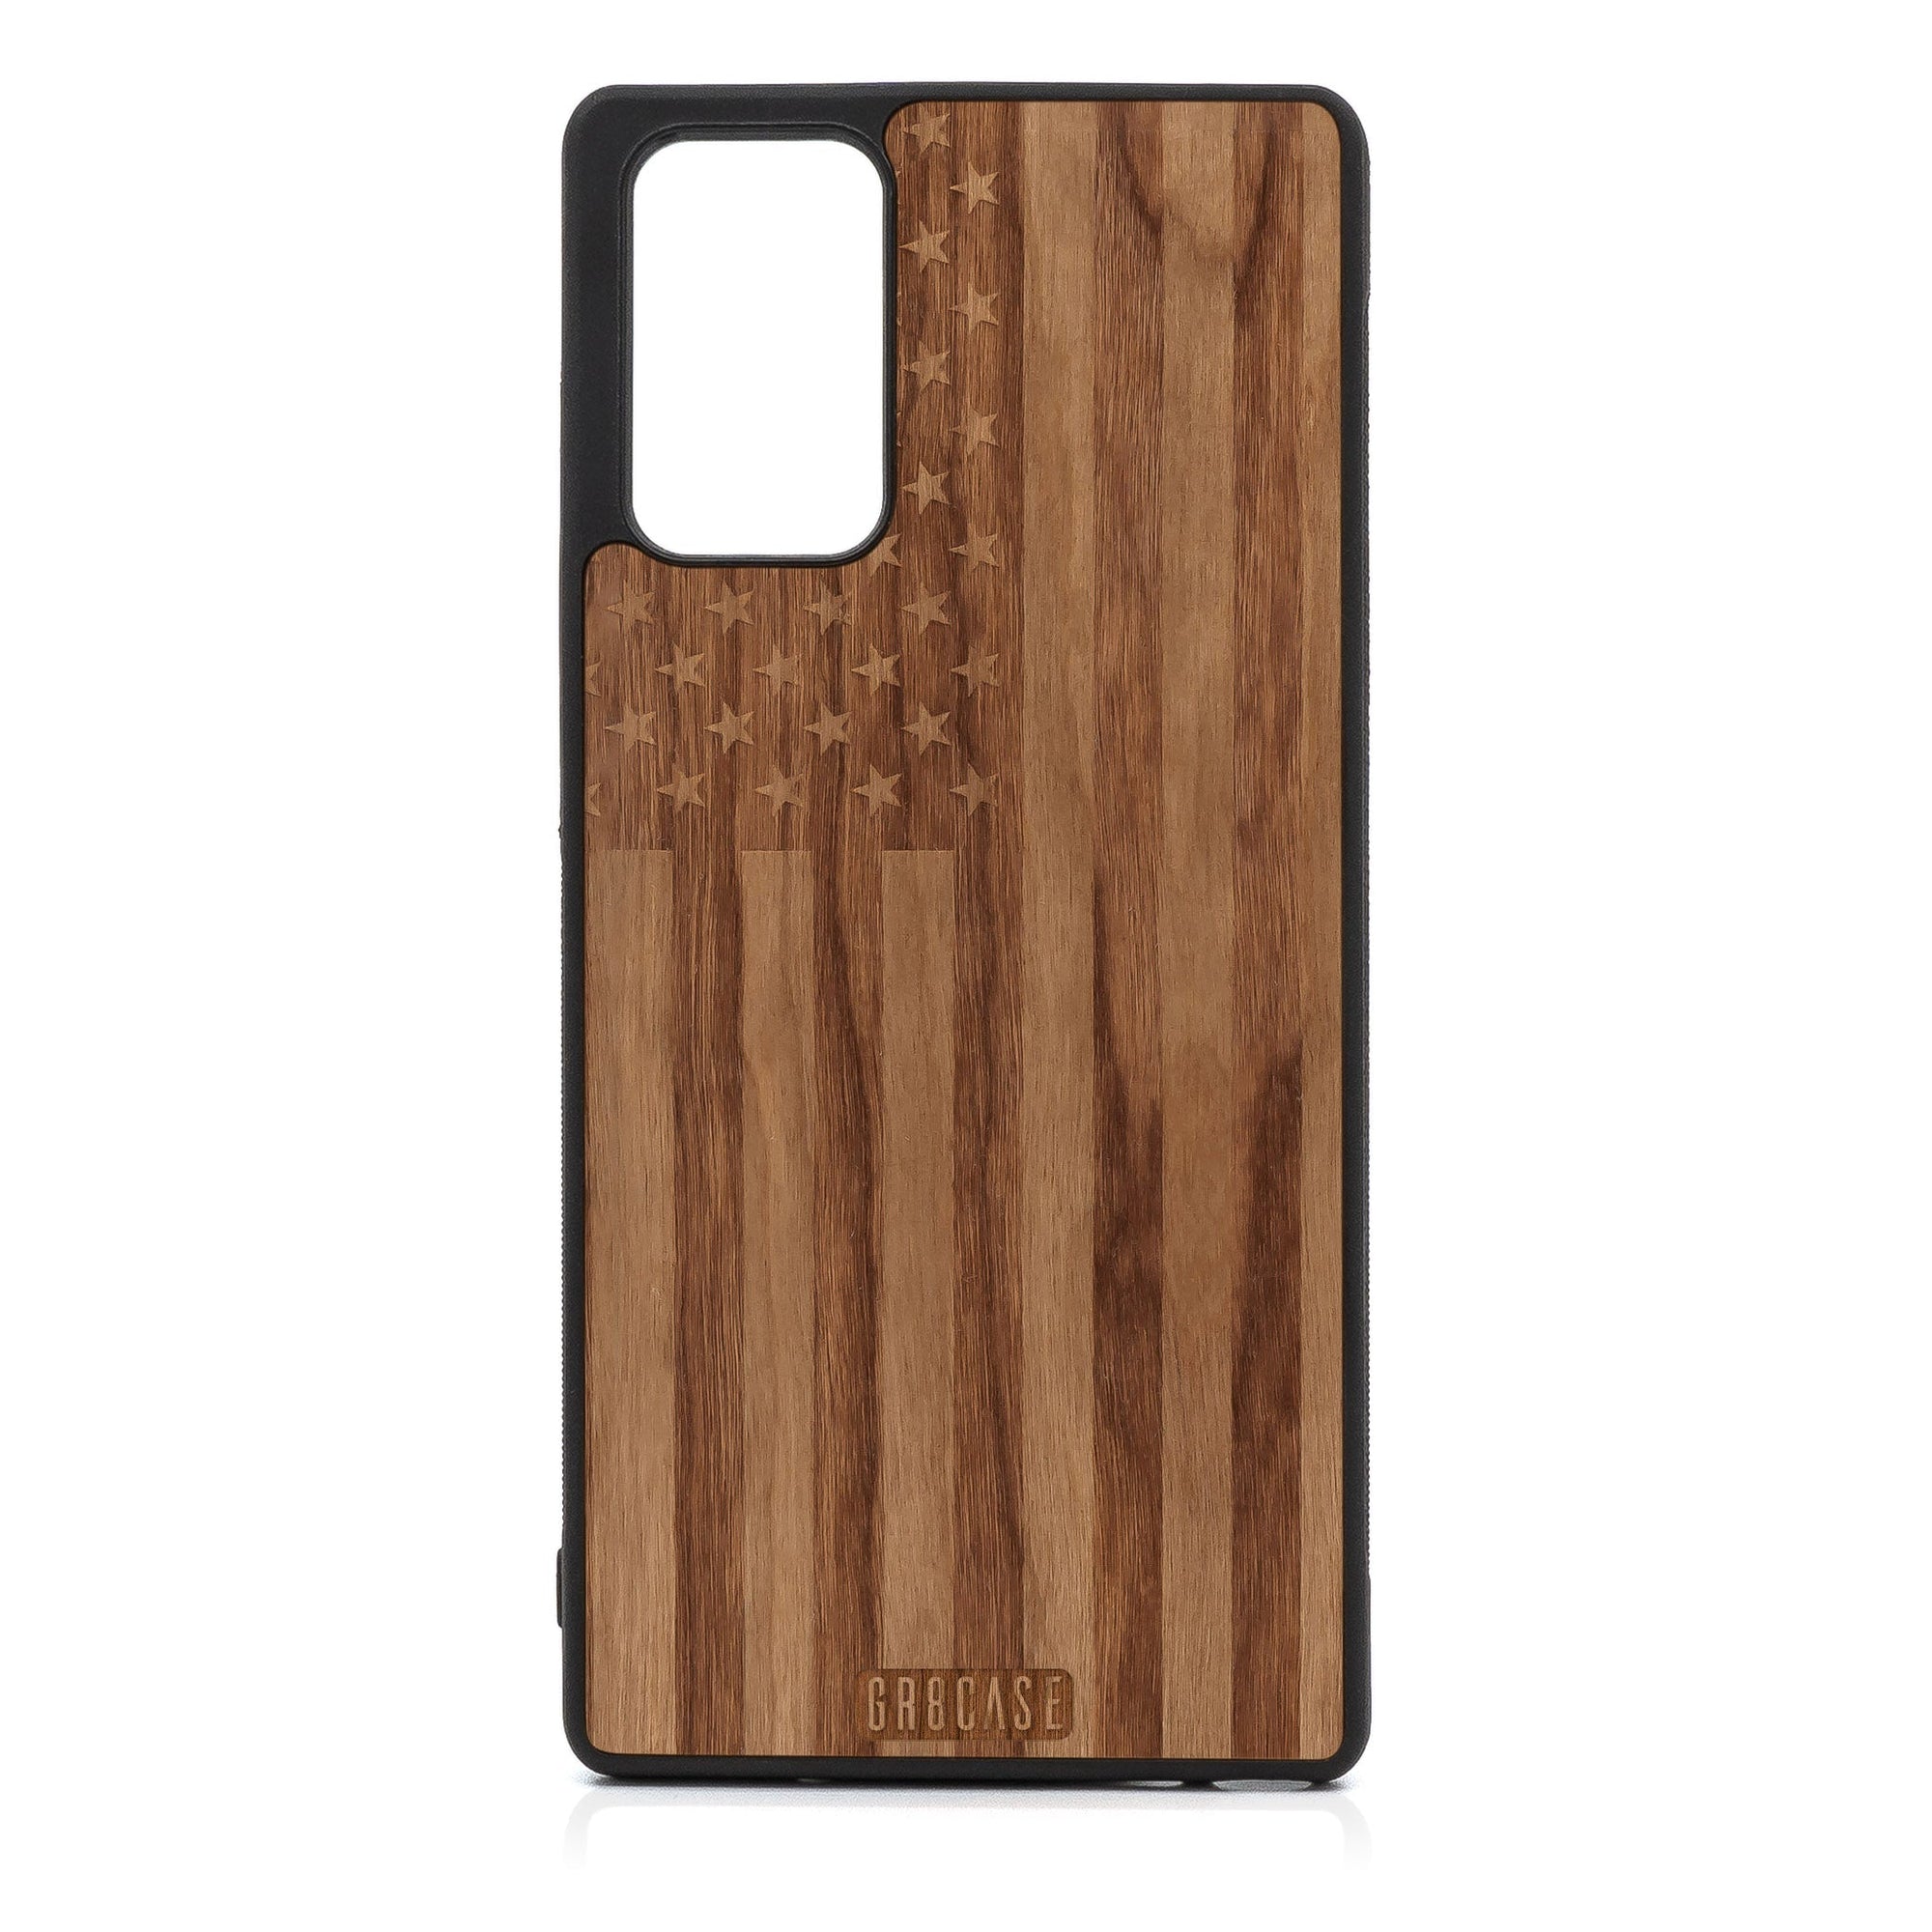 USA Flag Design Wood Case For Samsung Galaxy A72 5G